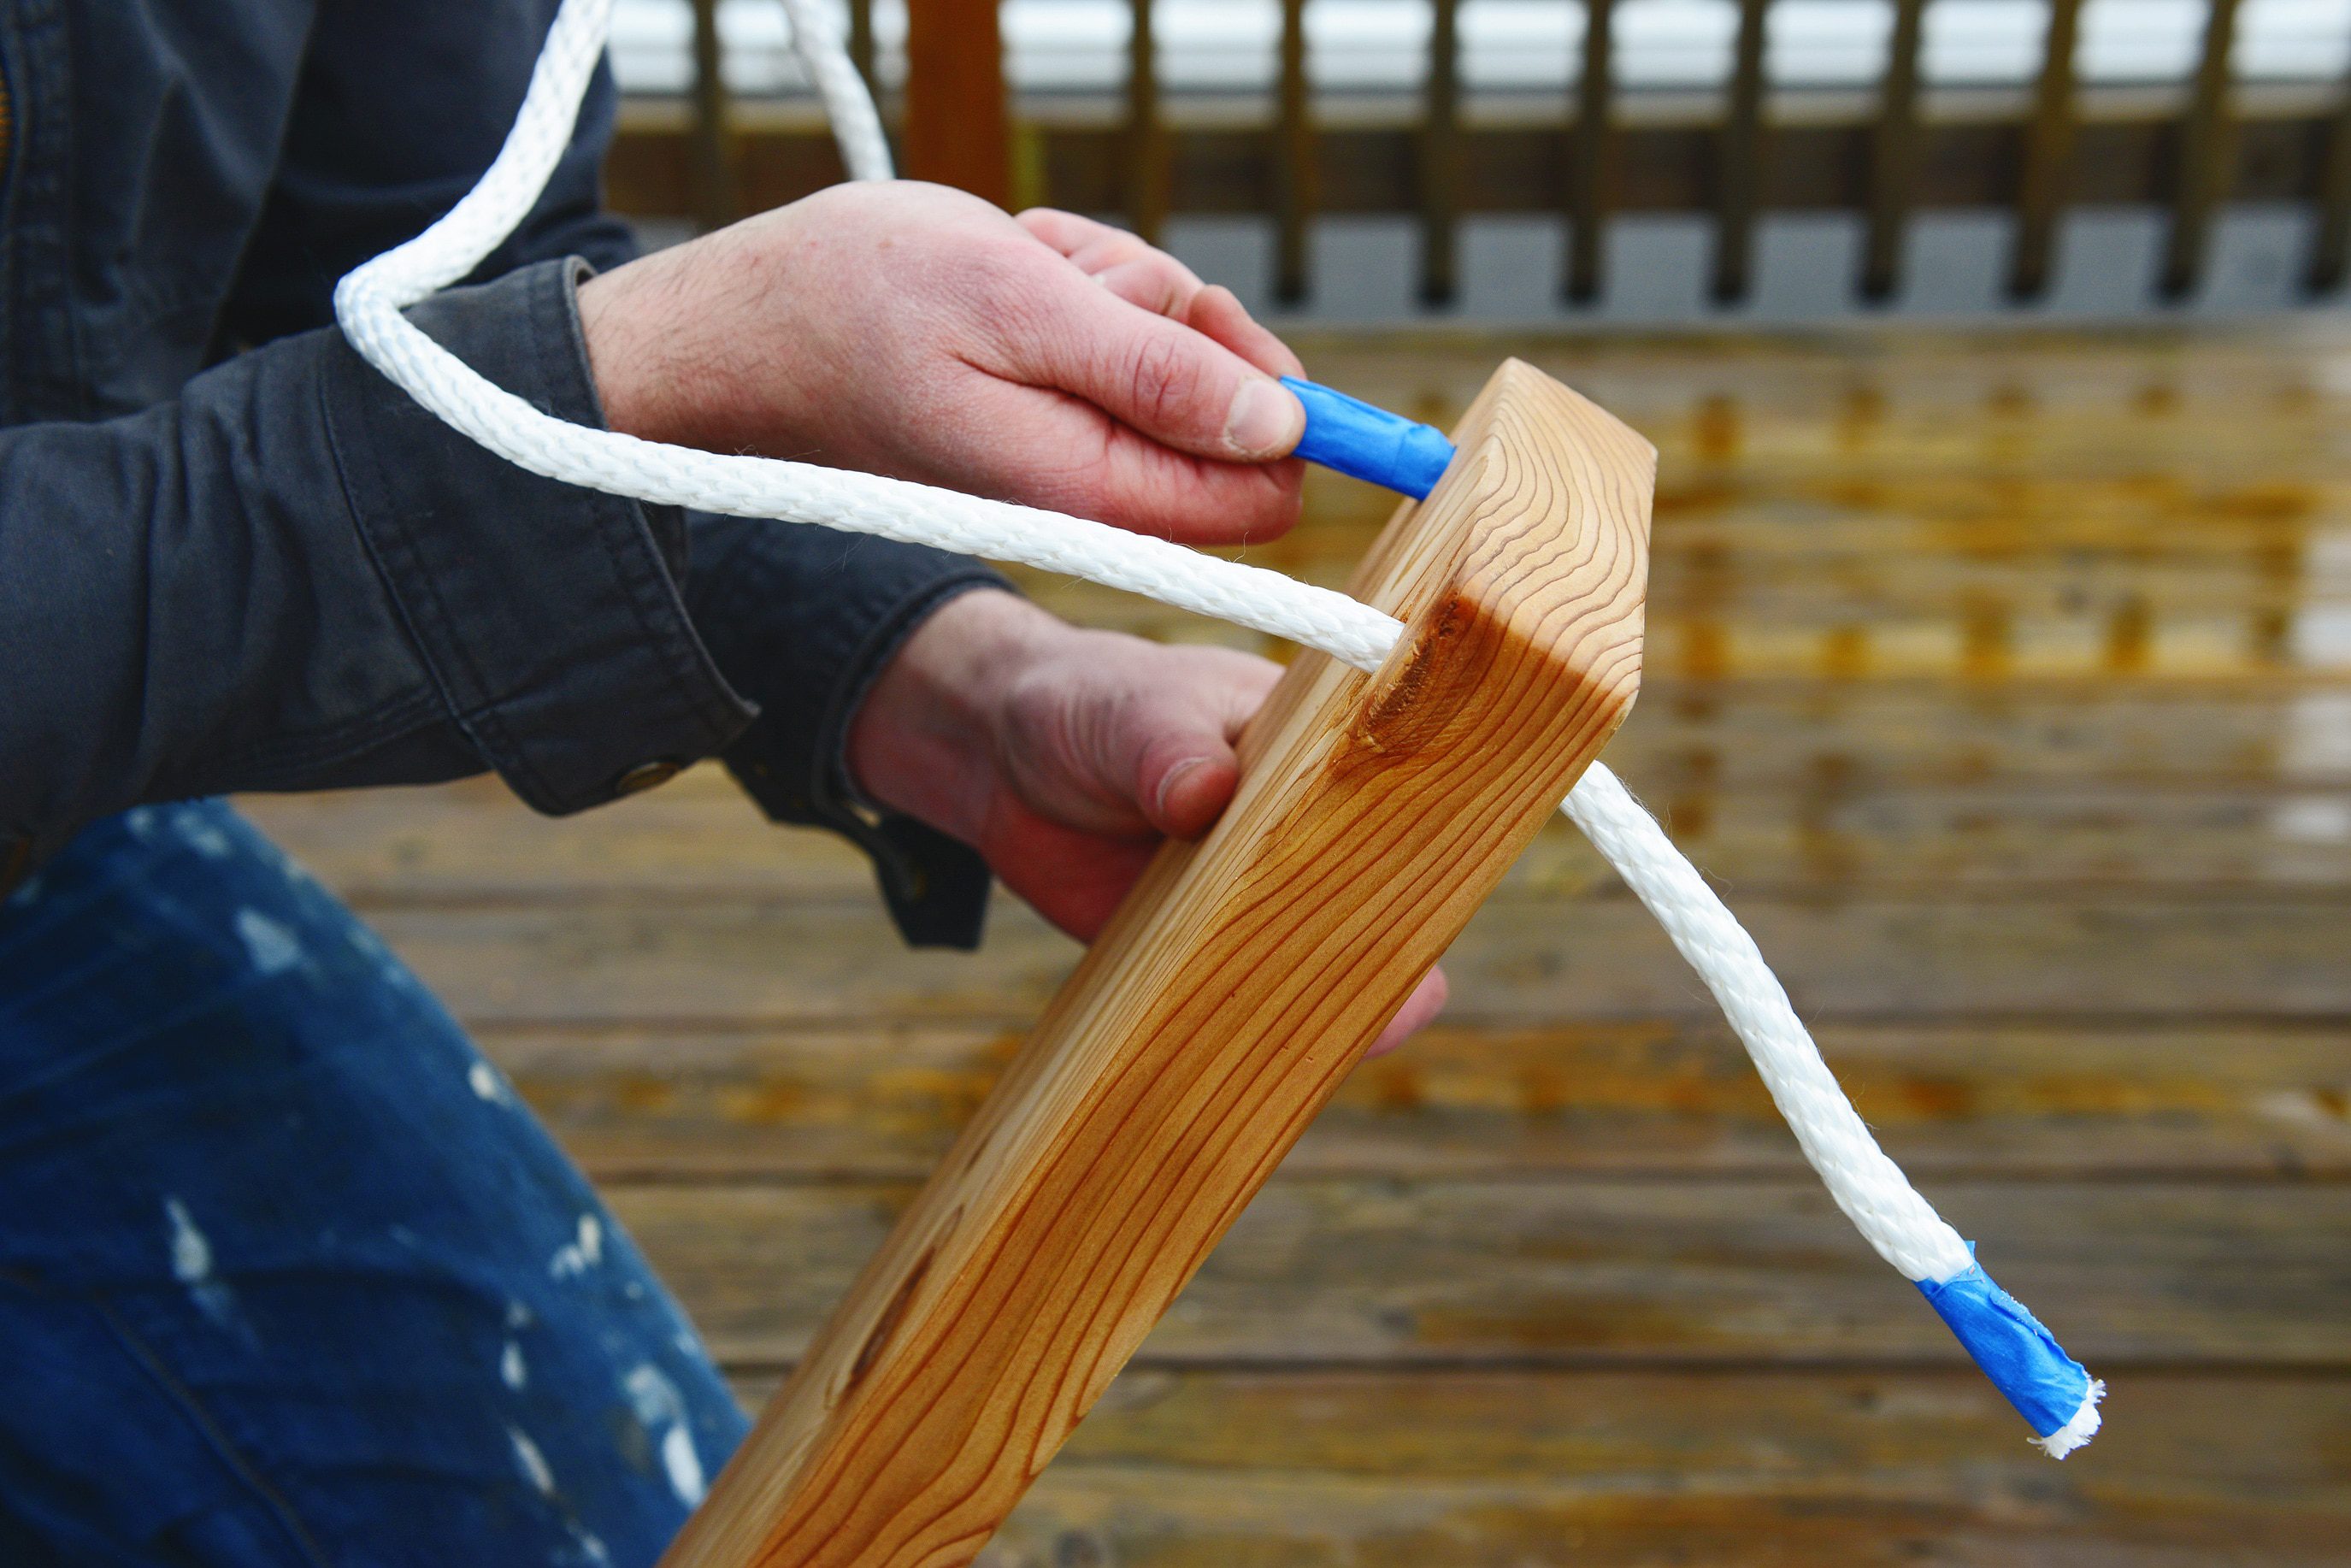 How to make a DIY rope swing // via Yellow Brick Home